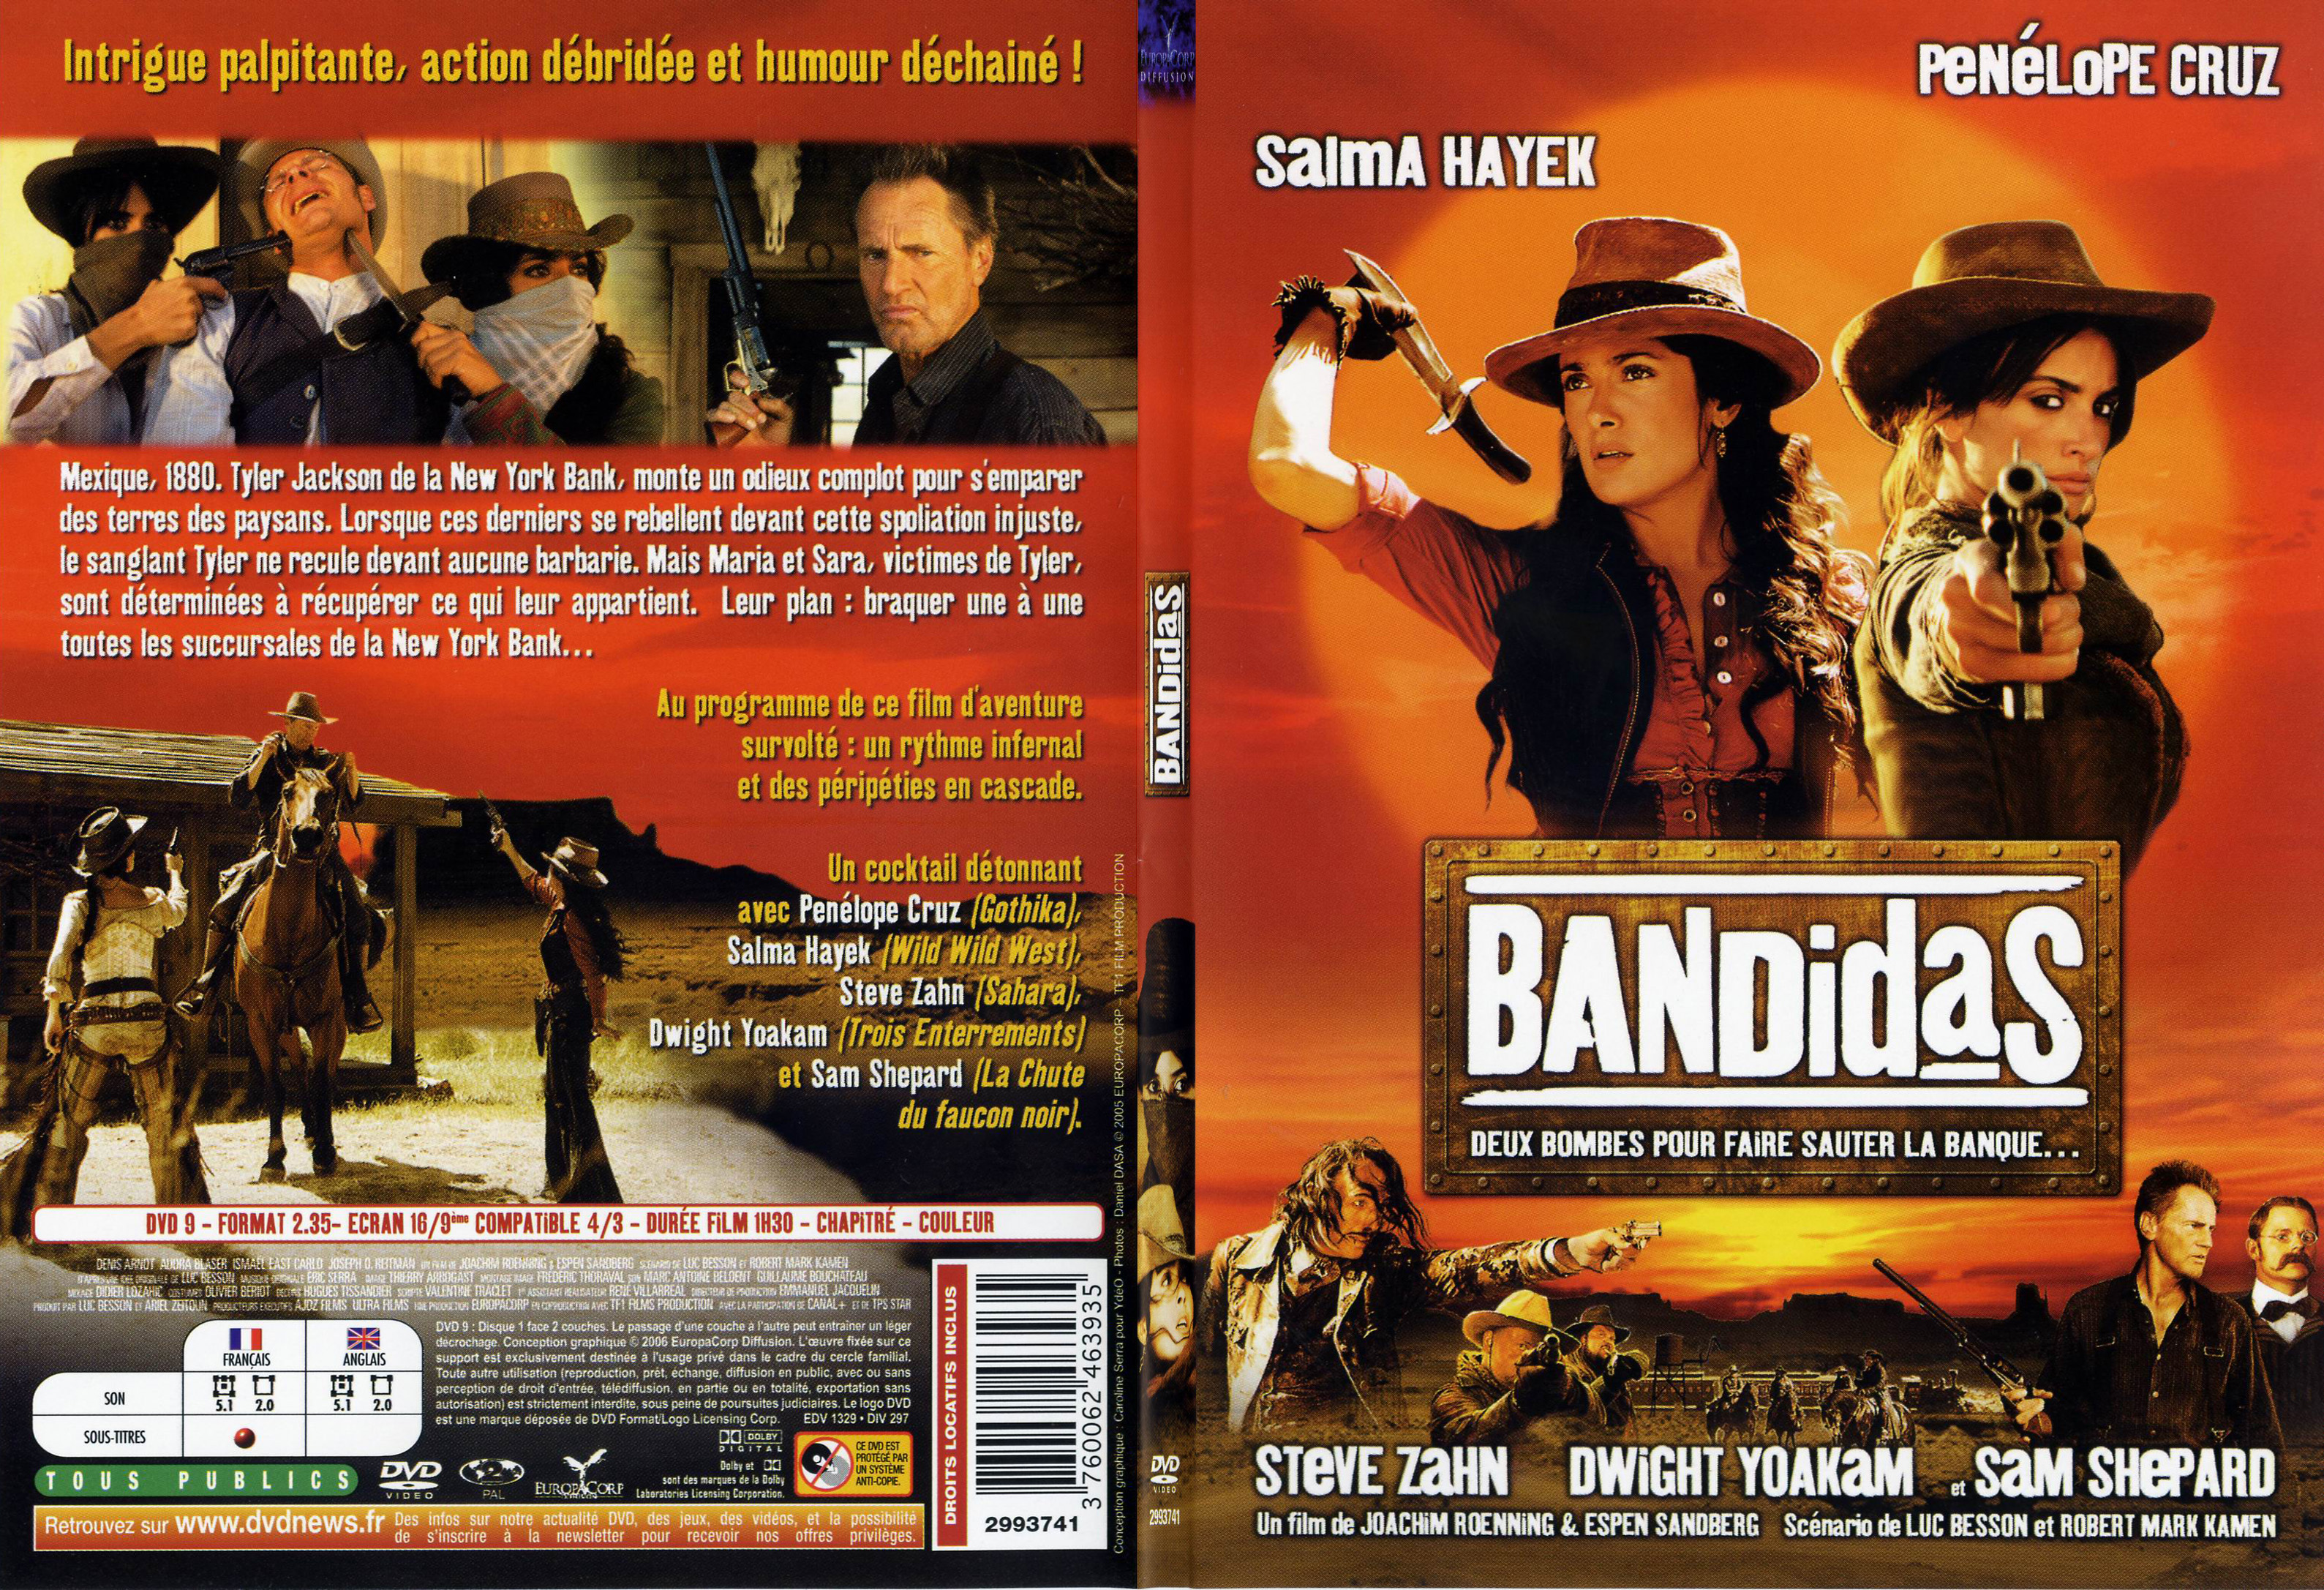 Jaquette DVD Bandidas - SLIM